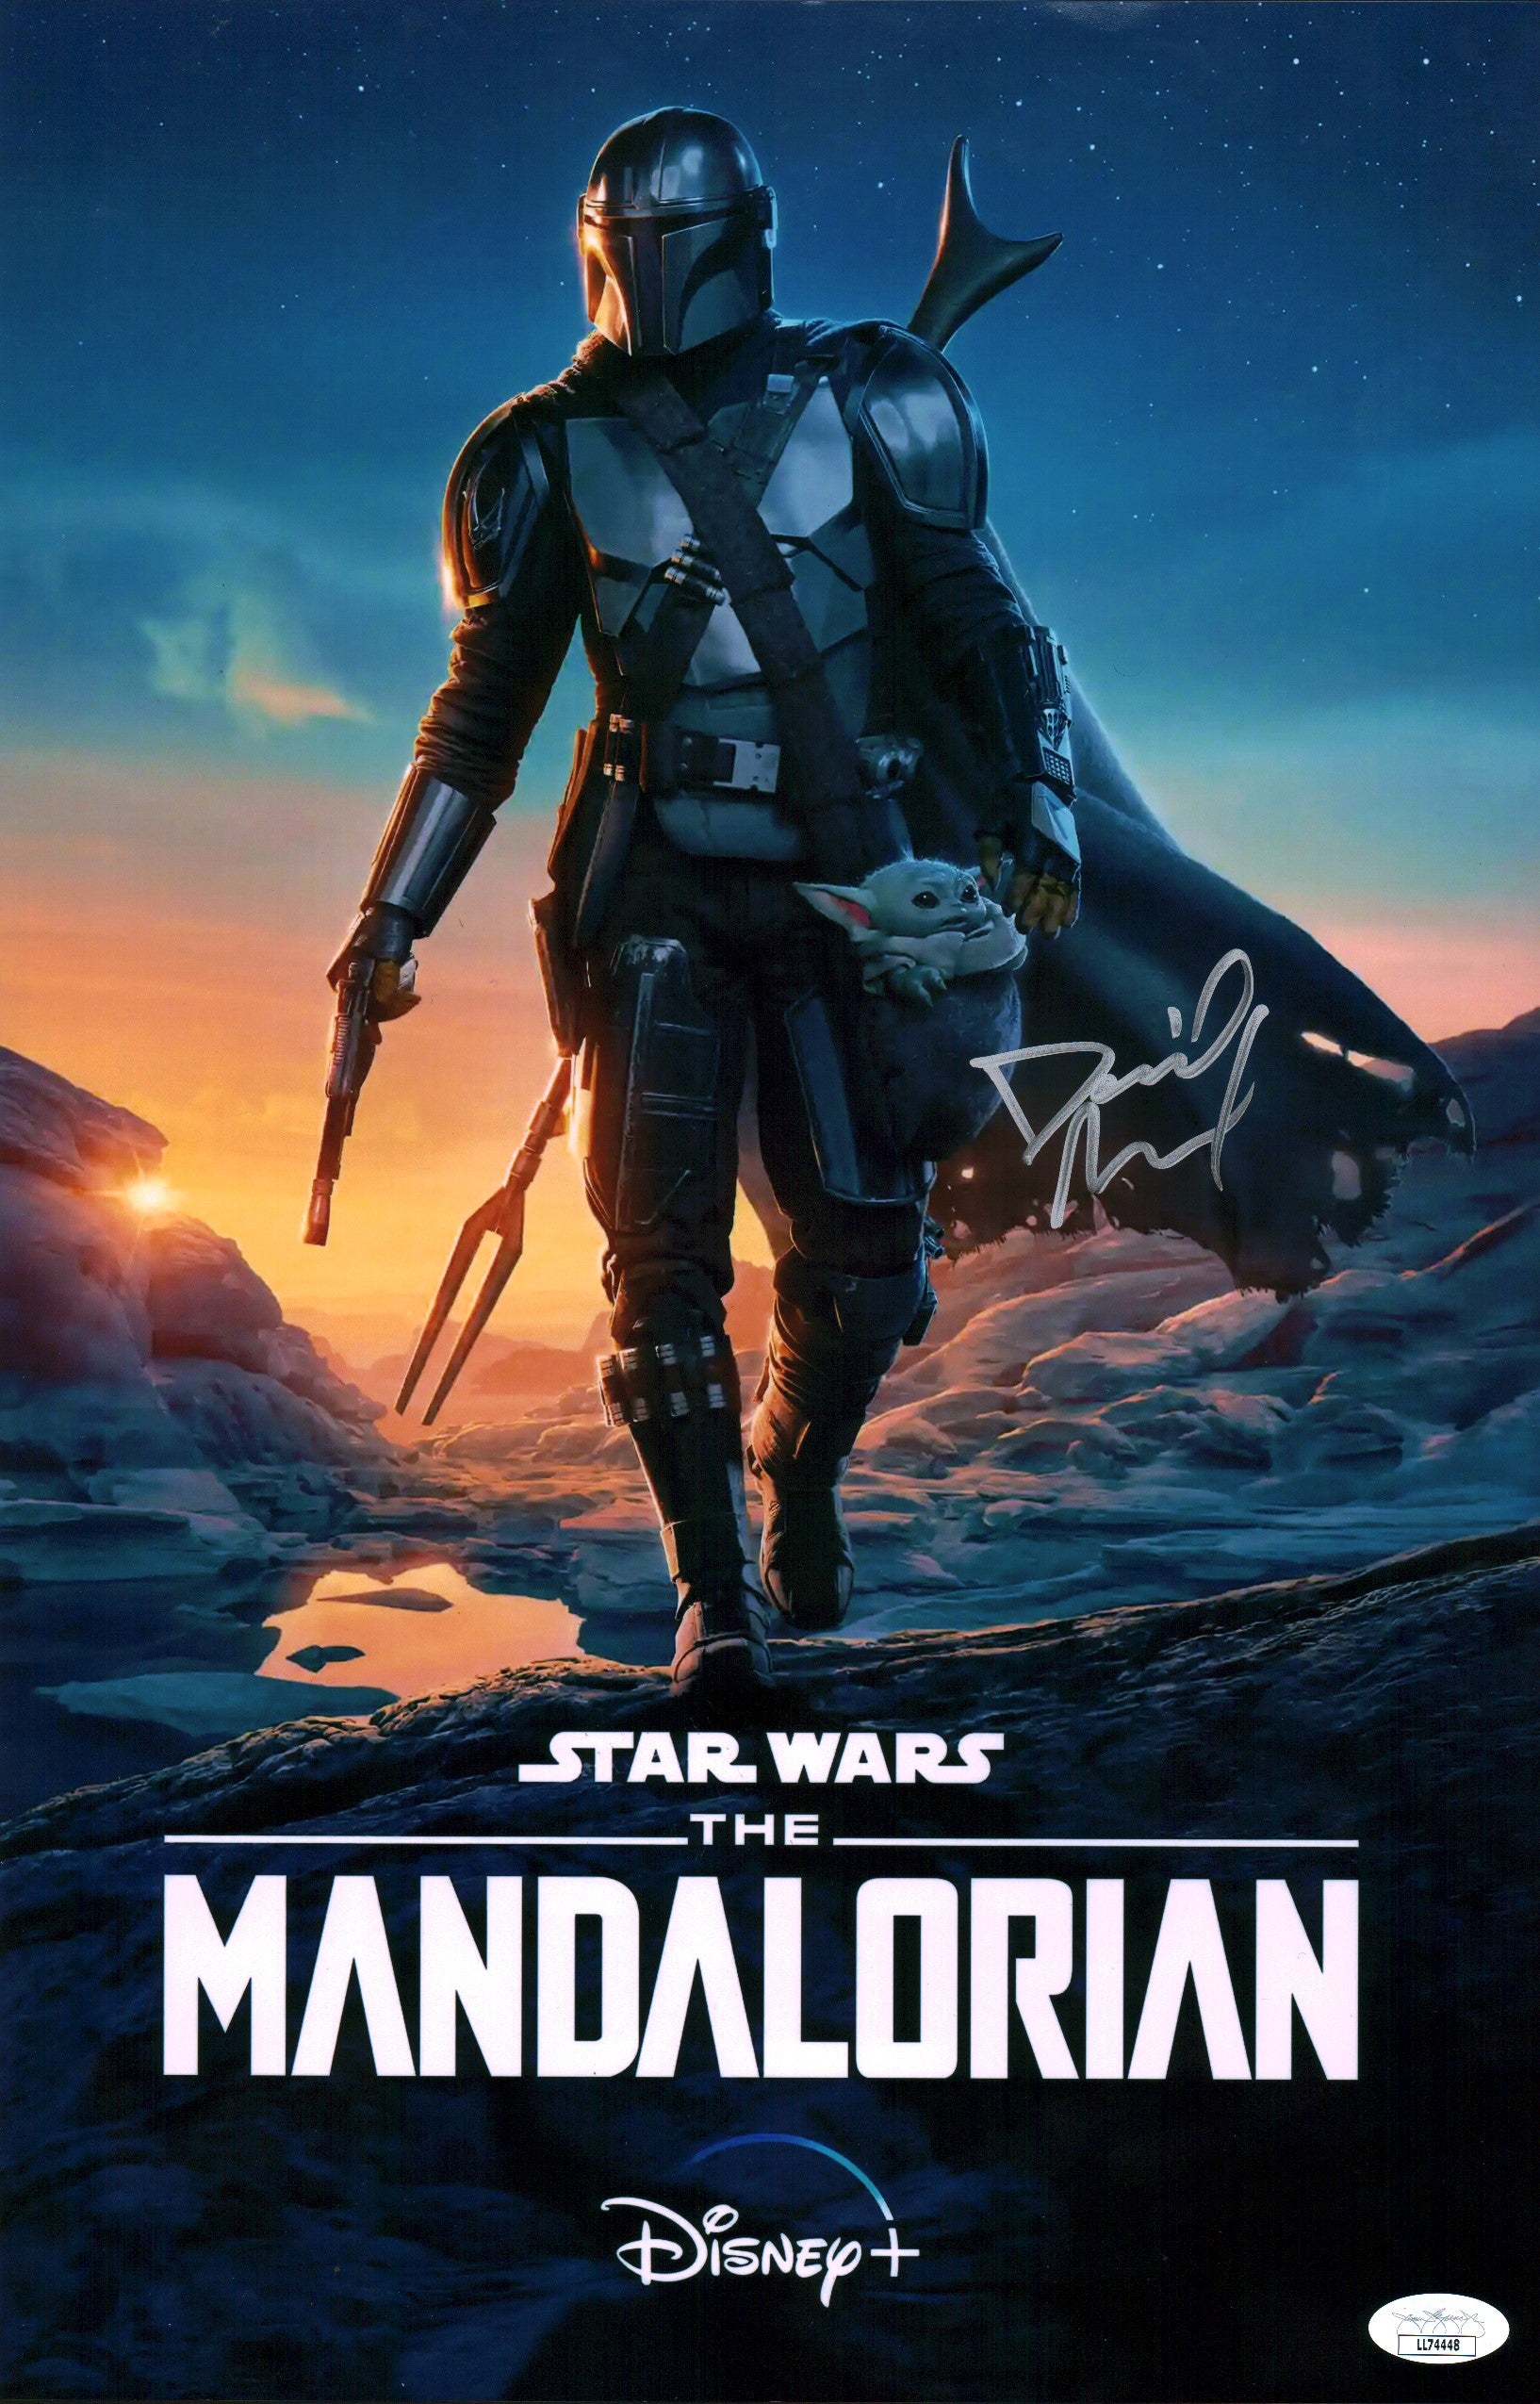 David Acord Star Wars The Mandalorian 11x17 Signed Photo Poster JSA COA Certified Autograph